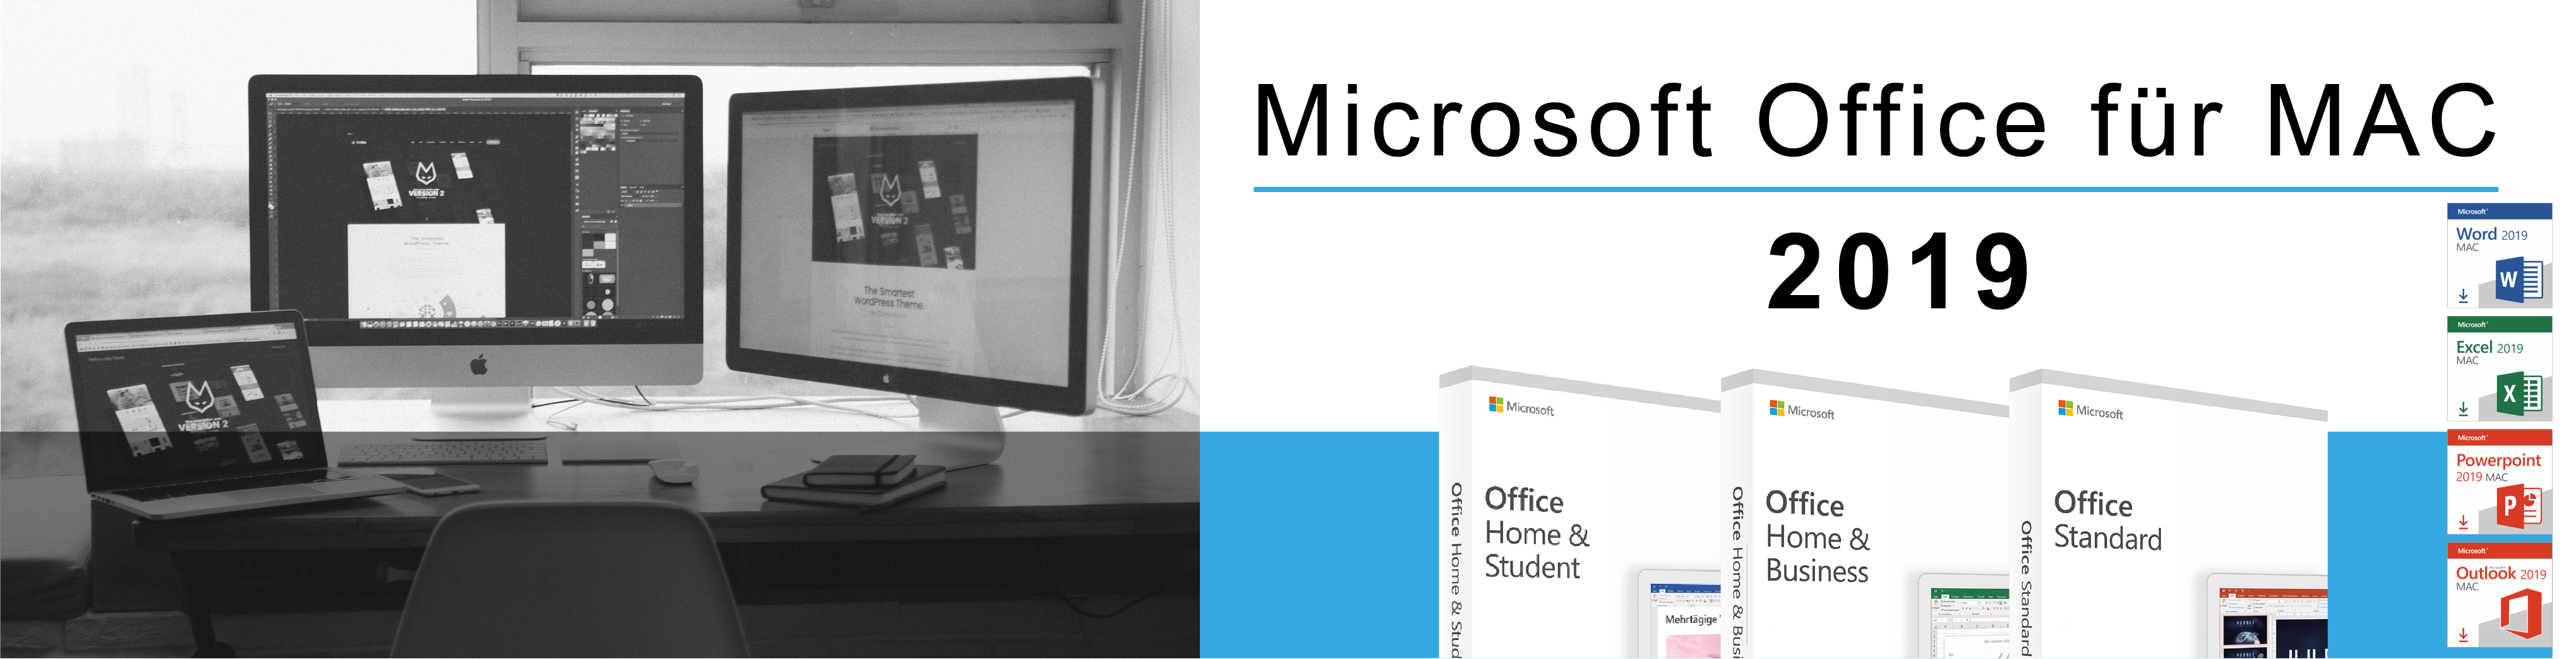 Microsoft Office for Mac 2019